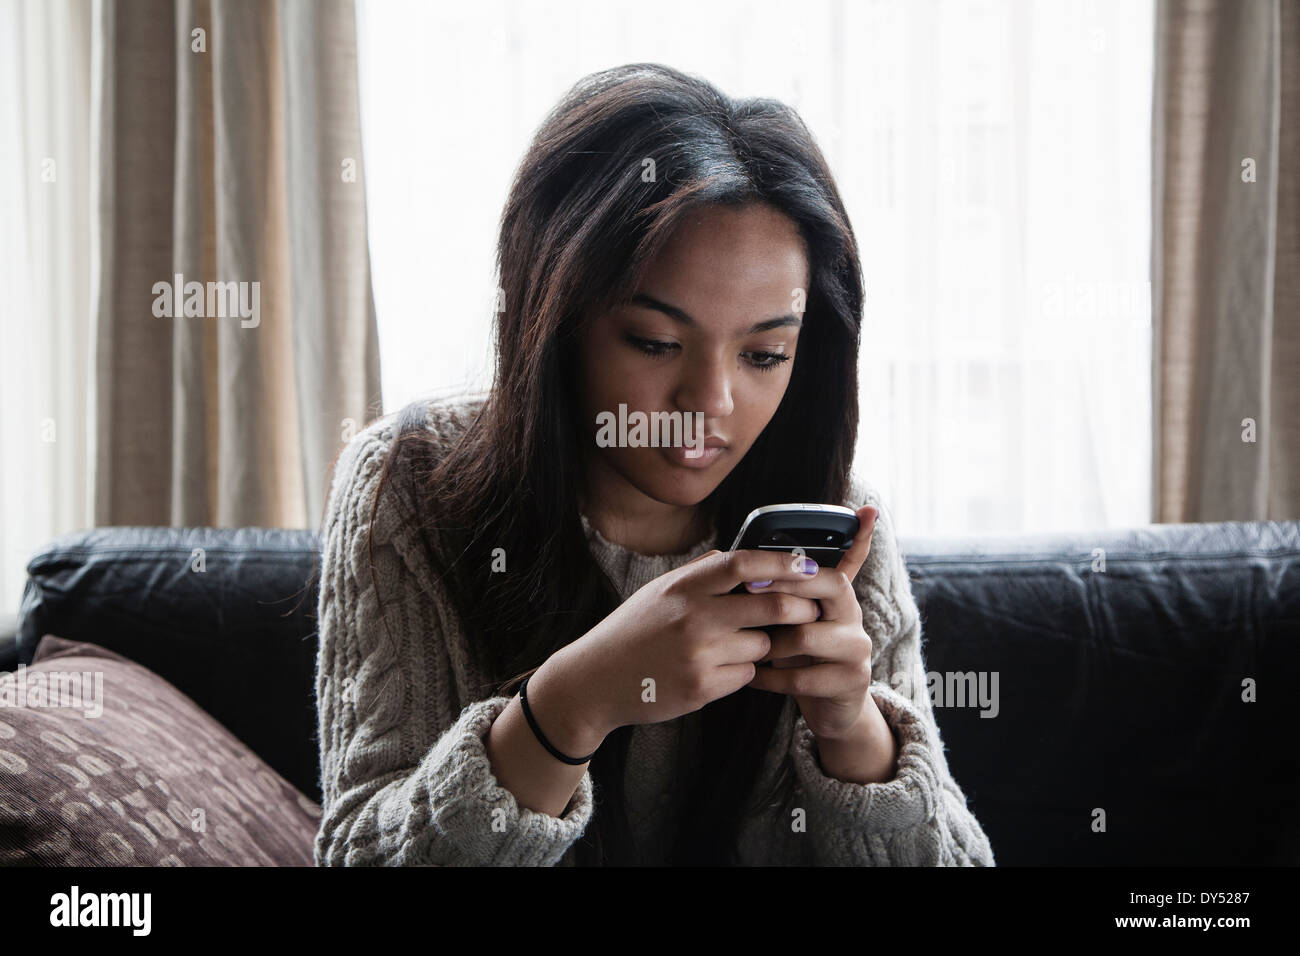 Teenage girl sitting on sofa texting on smartphone Stock Photo